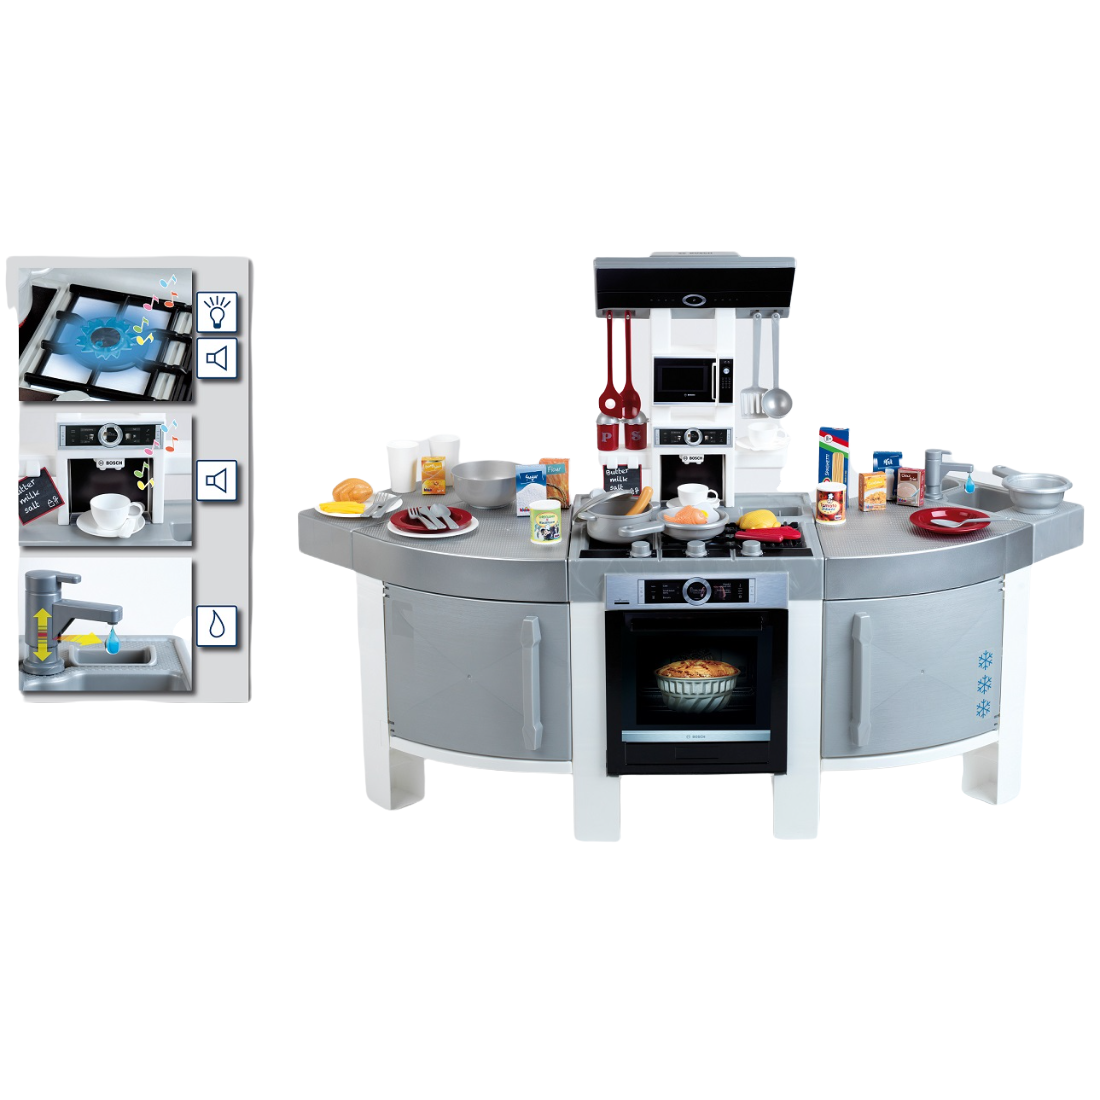 Игровой набор Bosch Mini Кухня Jumbo (7156) - фото 2